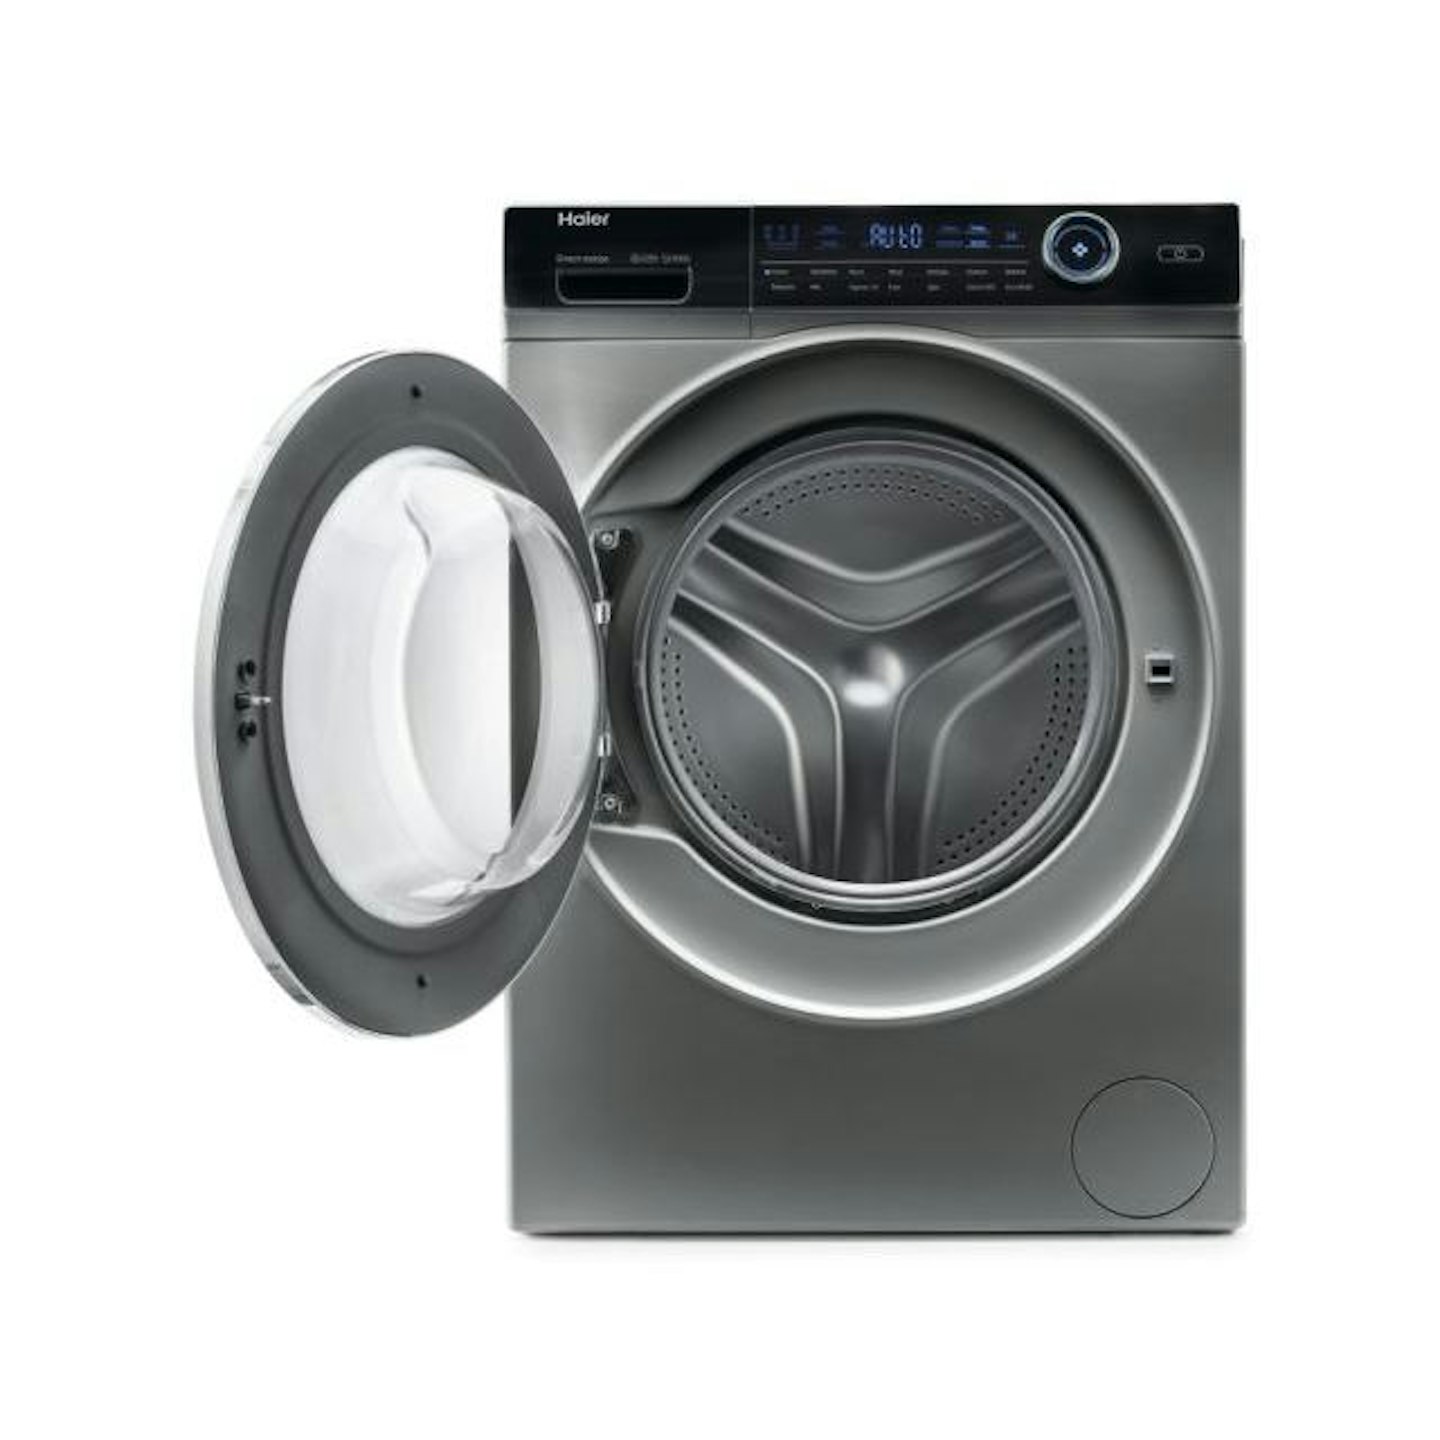 Washing machine I-Pro Series 7